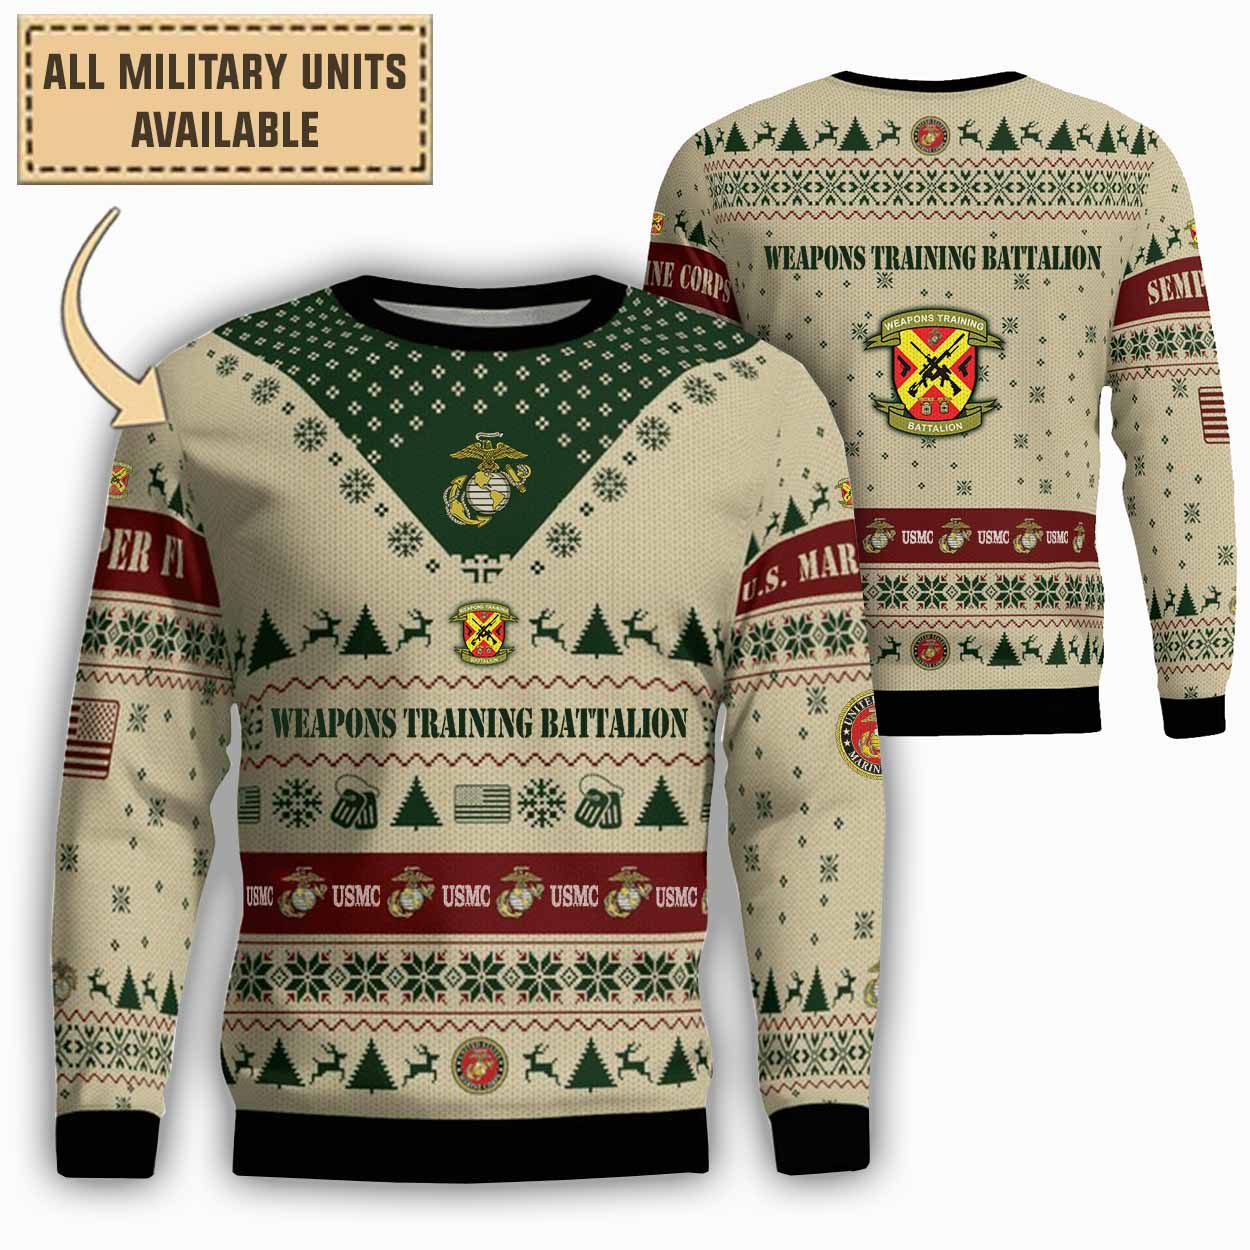 weapons training battalionlightweight sweater 11wd1